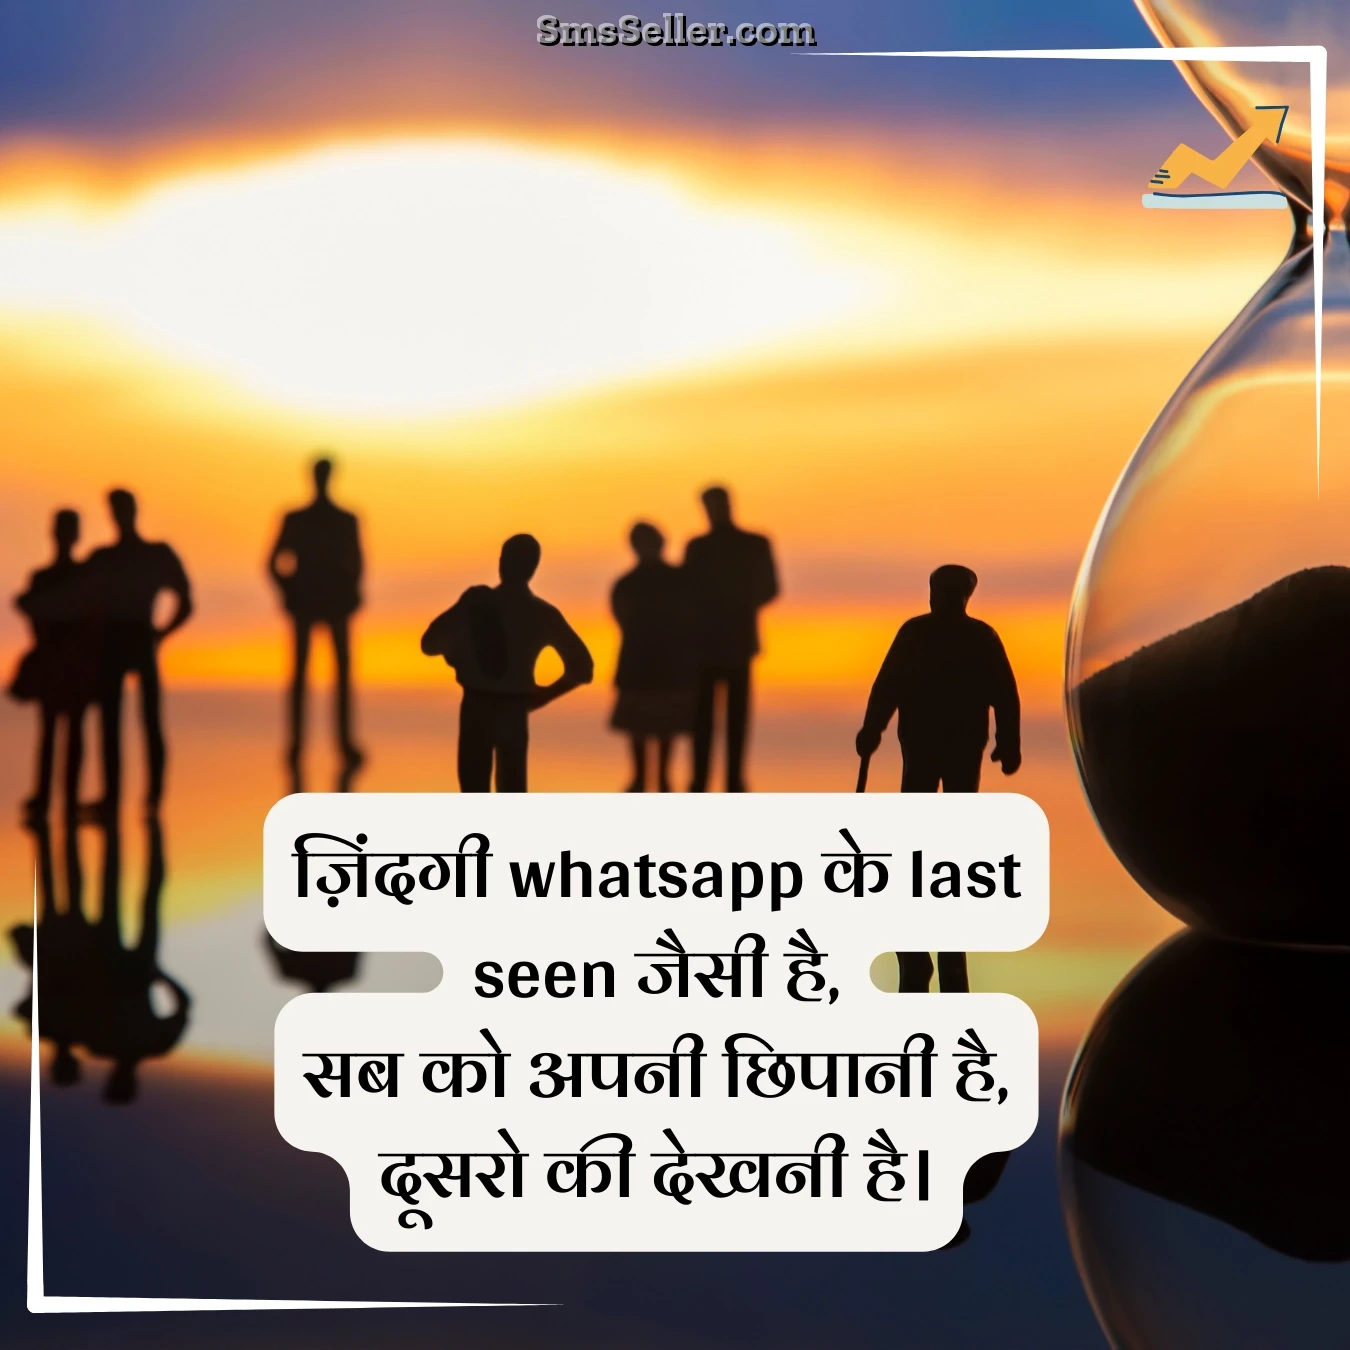 digital life in hindi zindagee whatsapp ke lastseen